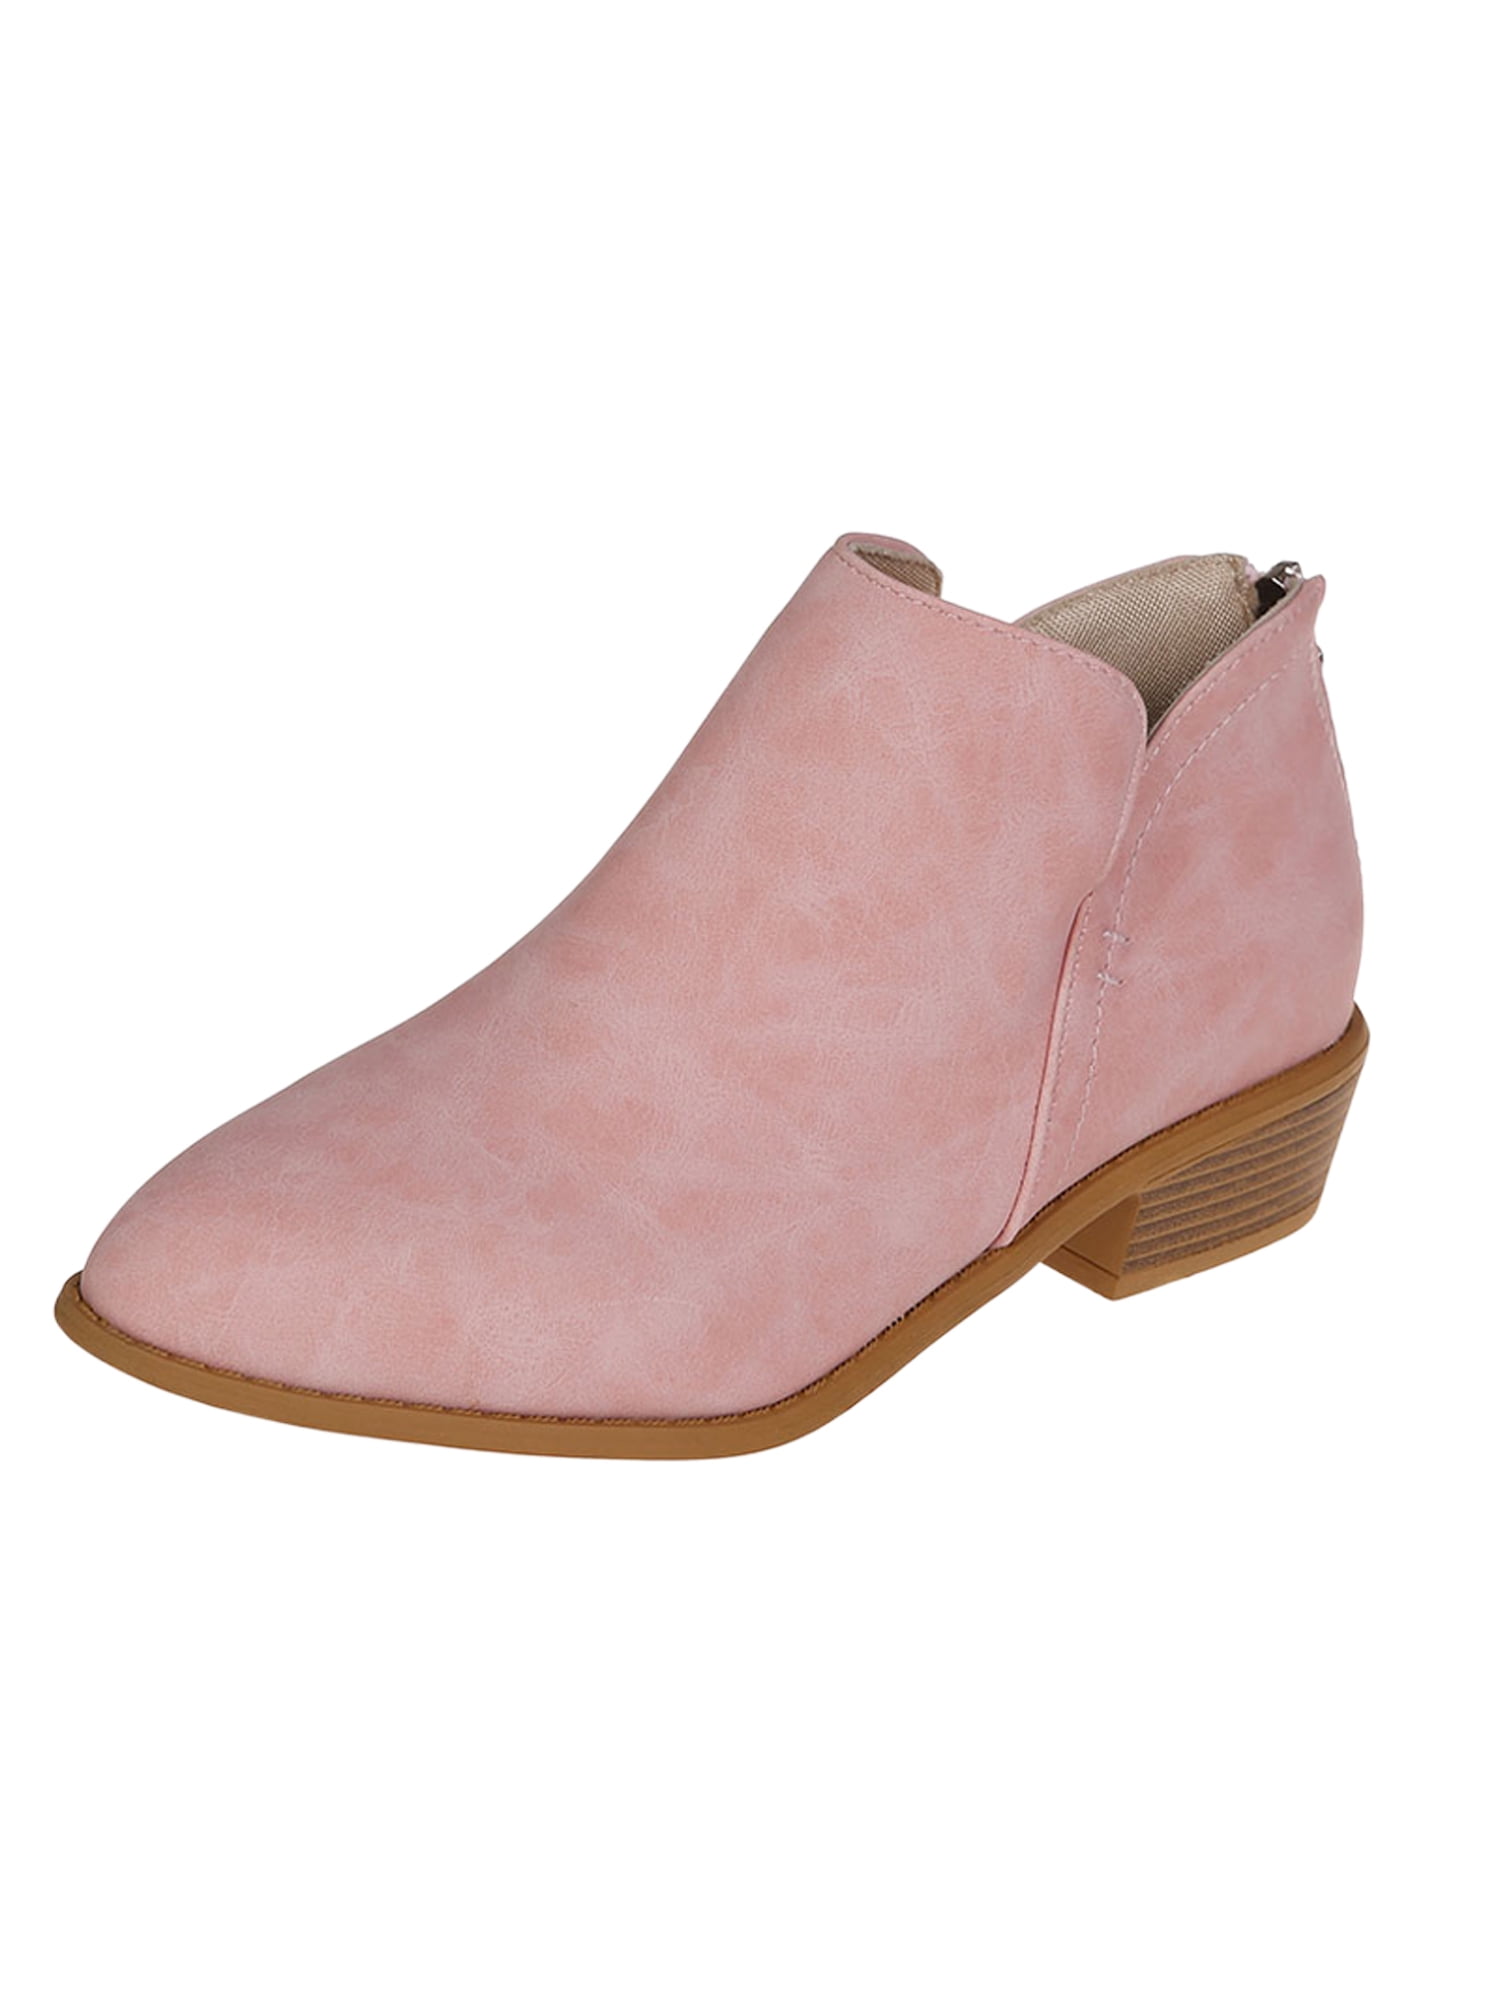 Ferndule Womens Nonslip Round Toe Shoes Walking Comfort Slip On Ankle Formal Low Heel Chelsea Boot Pink 5.5 - Walmart.com